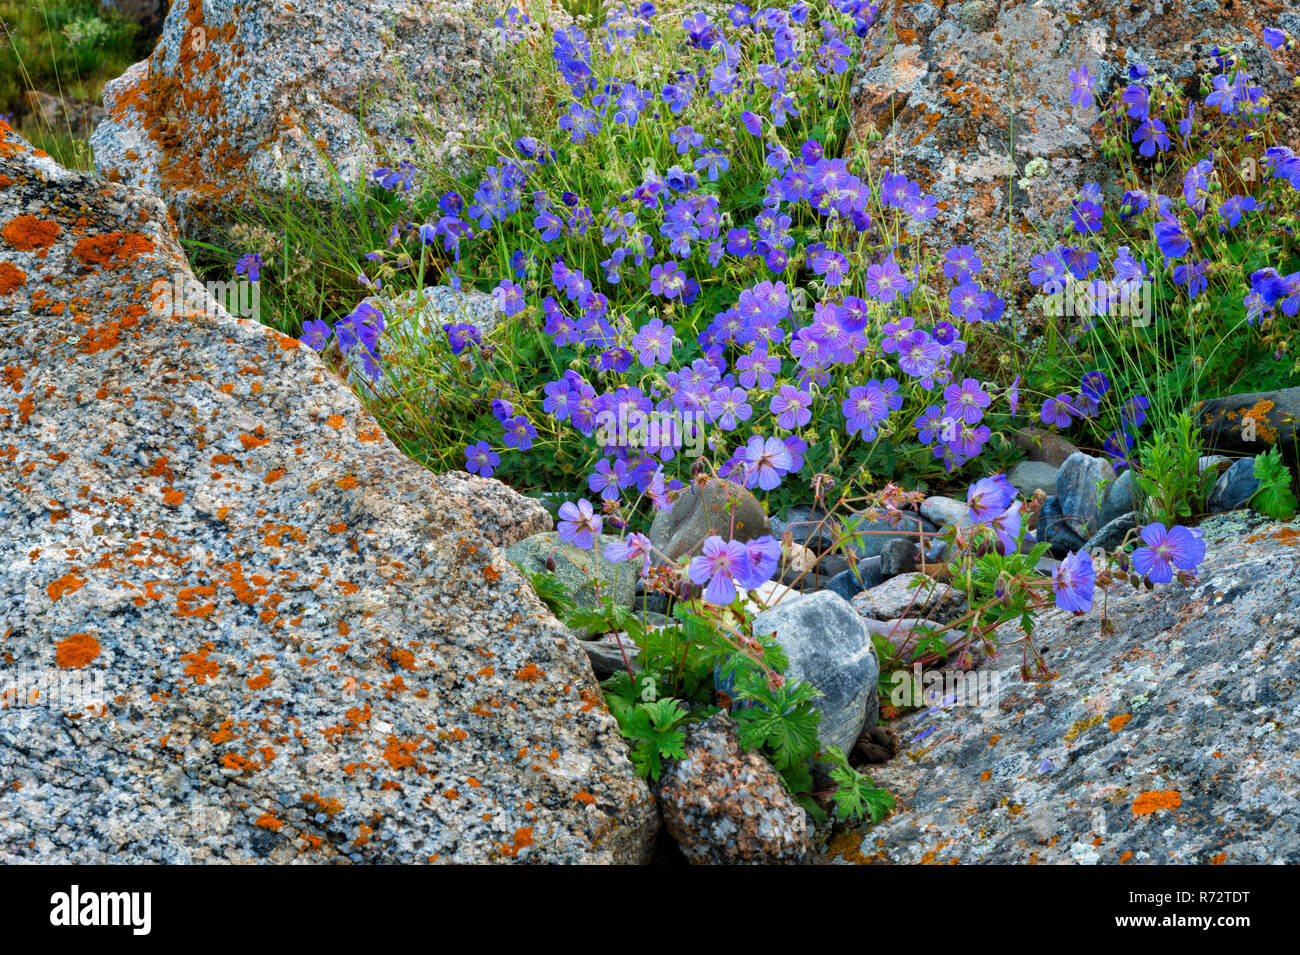 Geranium collinum growing between rocks covered with lichen, Naryn gorge, Naryn Region, Kyrgyzstan Stock Photo